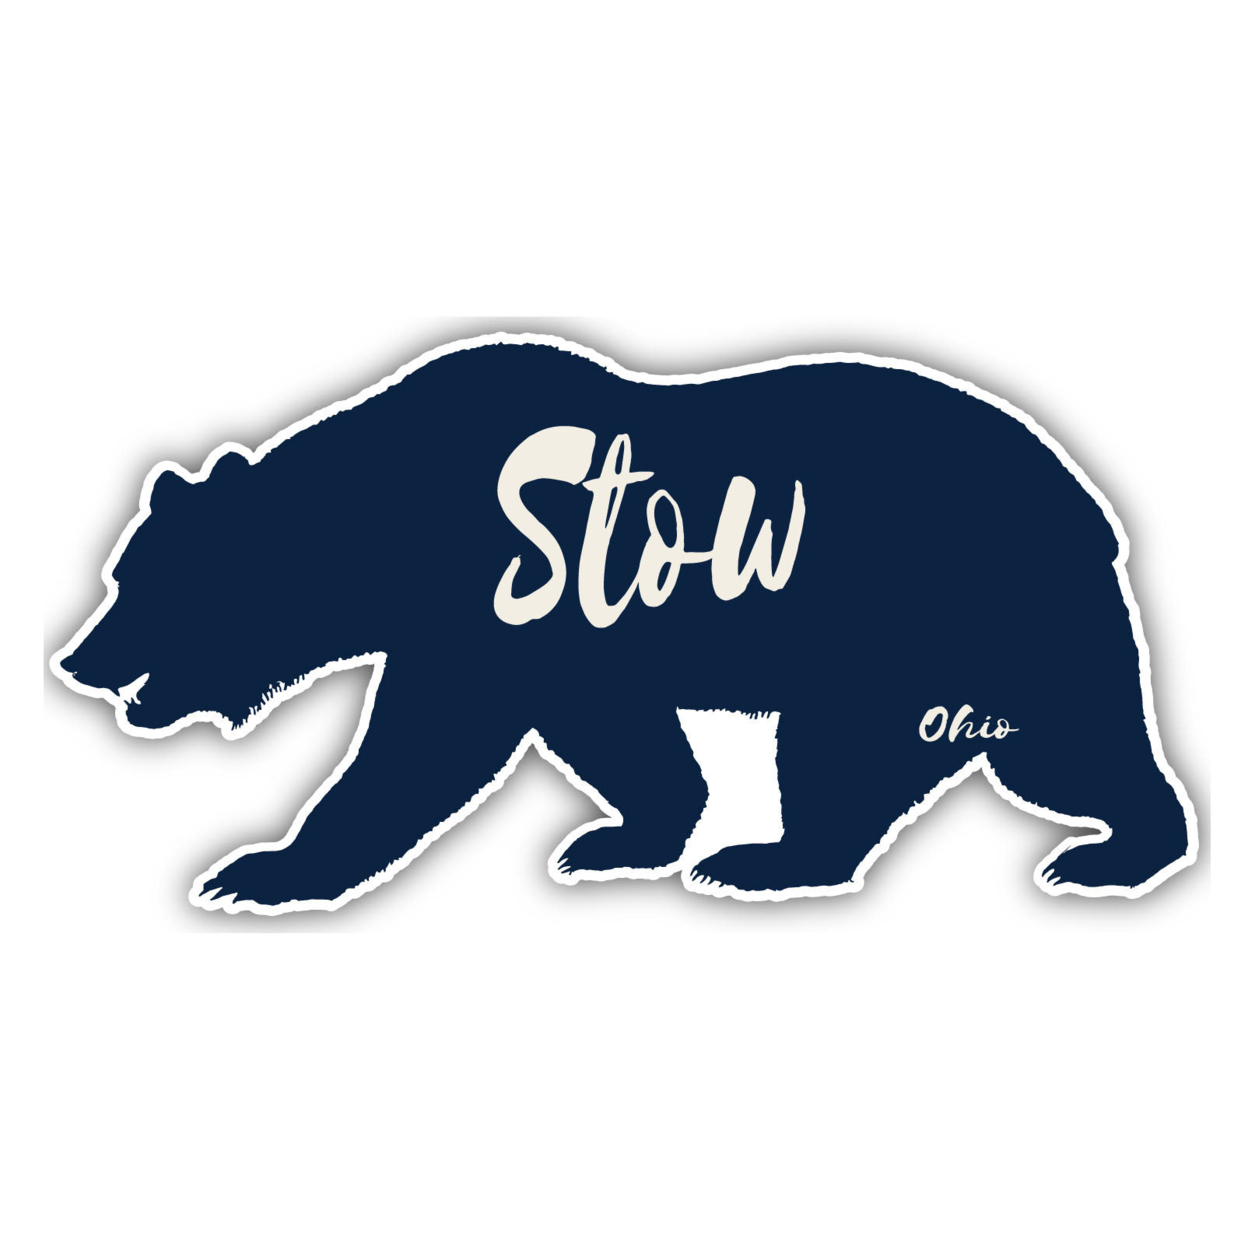 Stow Ohio Souvenir Decorative Stickers (Choose Theme And Size) - Single Unit, 4-Inch, Bear